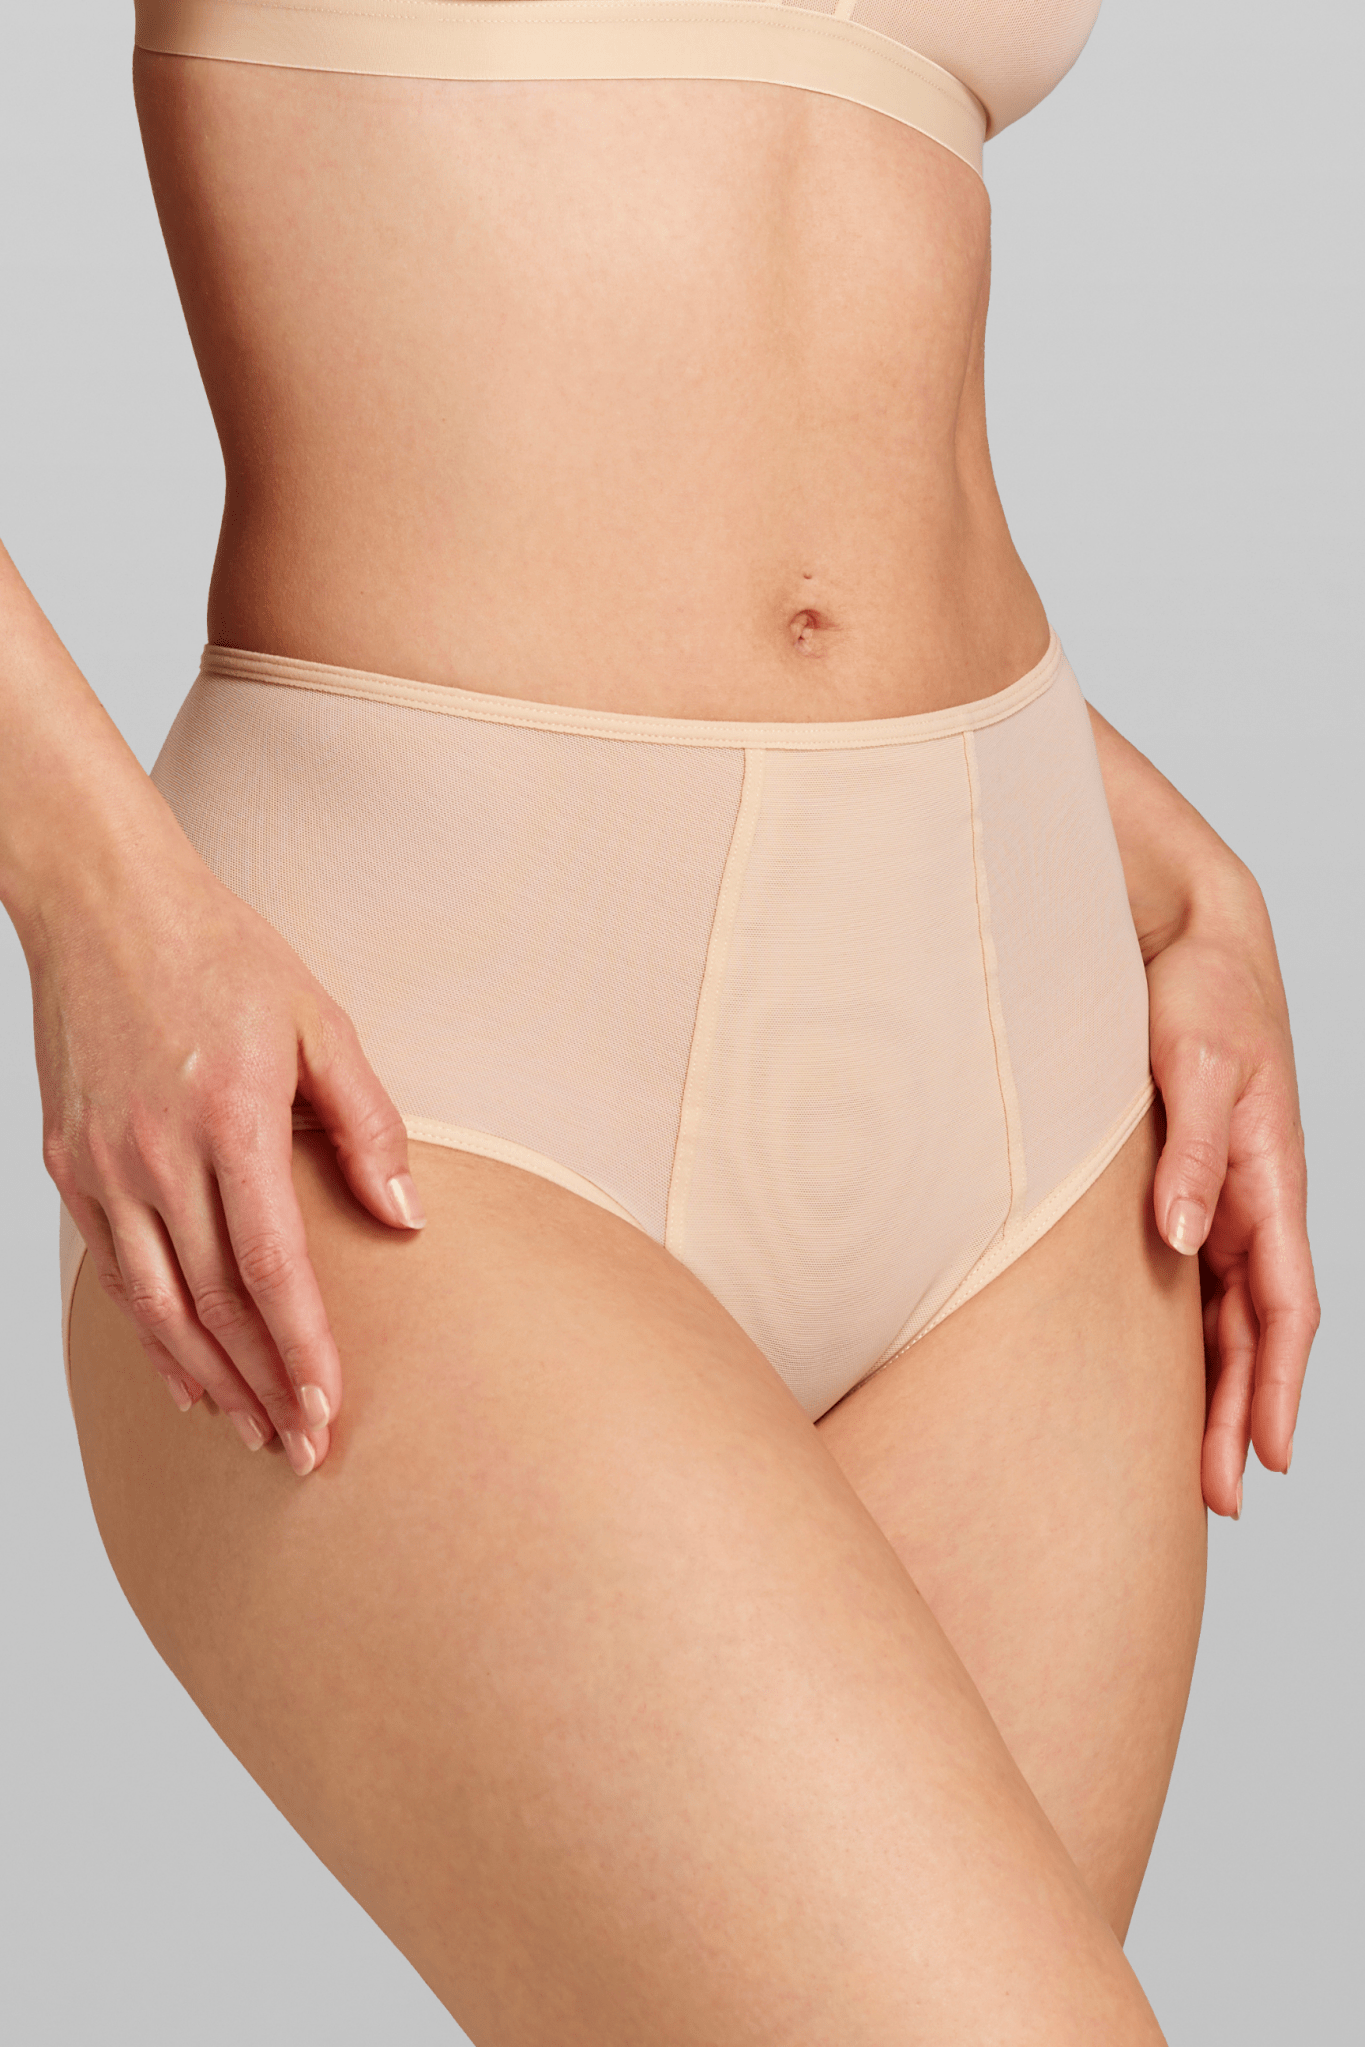 VictoryMall Seamless Panties Women Romantic Design Comfort Size L~XL  Underwear Seluar Dalam Wanita Spender冰丝纯棉内裤